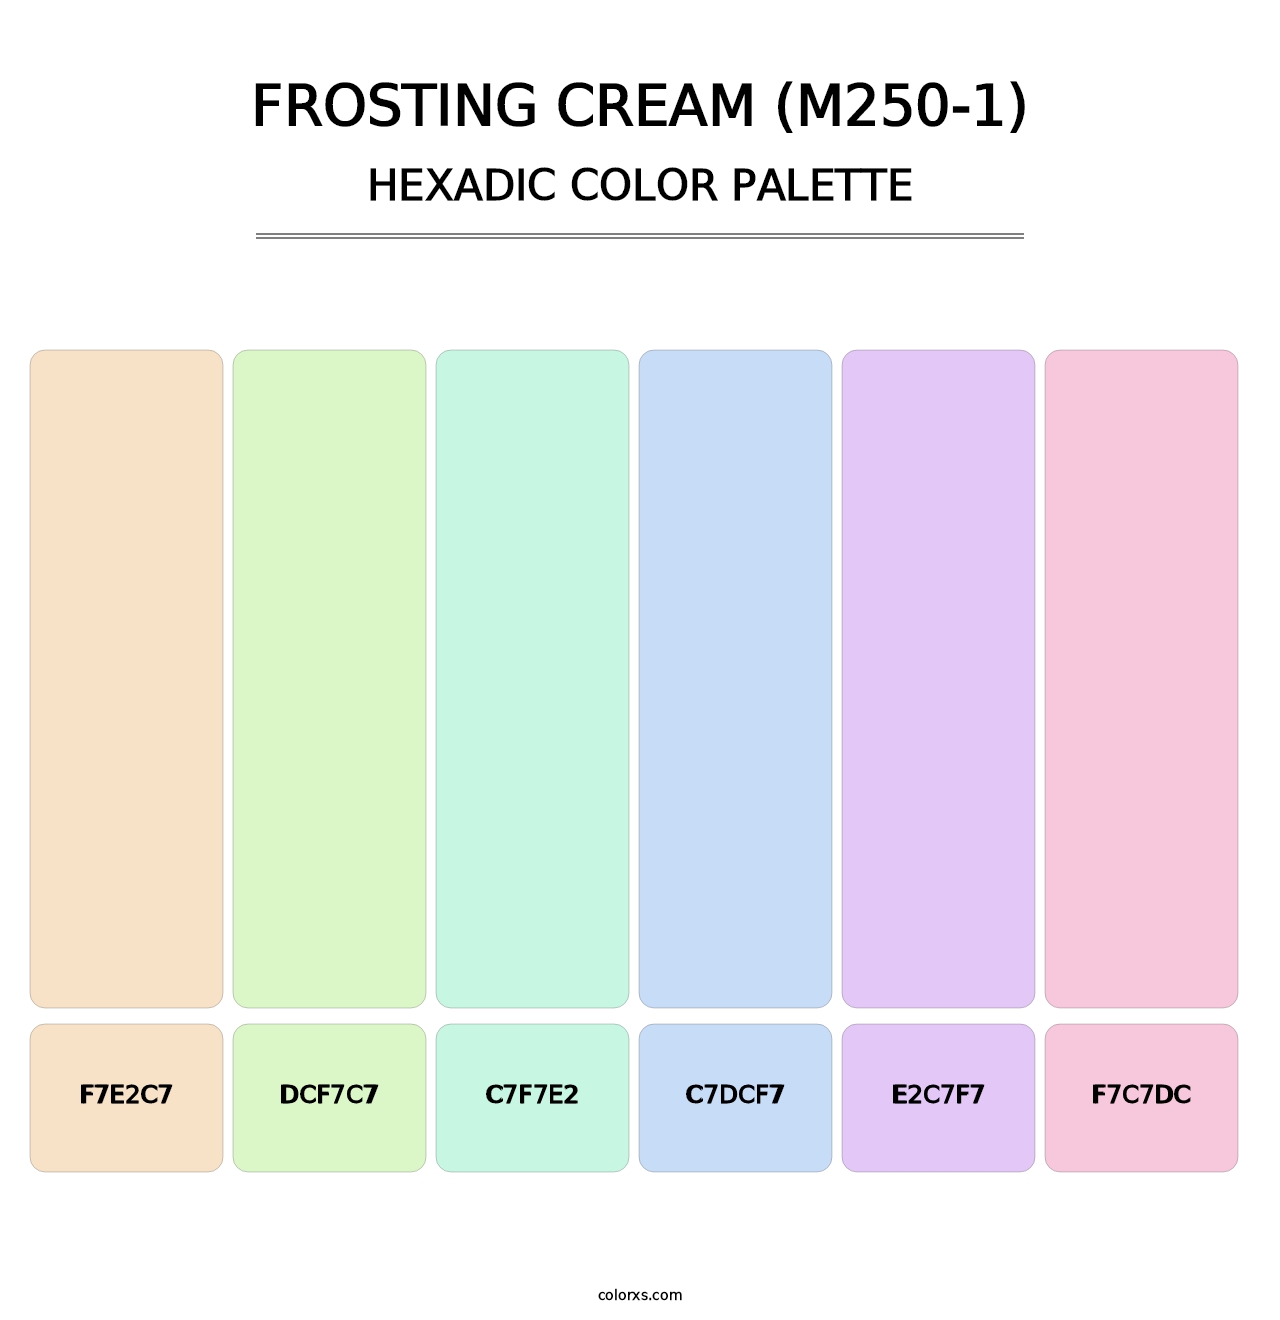 Frosting Cream (M250-1) - Hexadic Color Palette